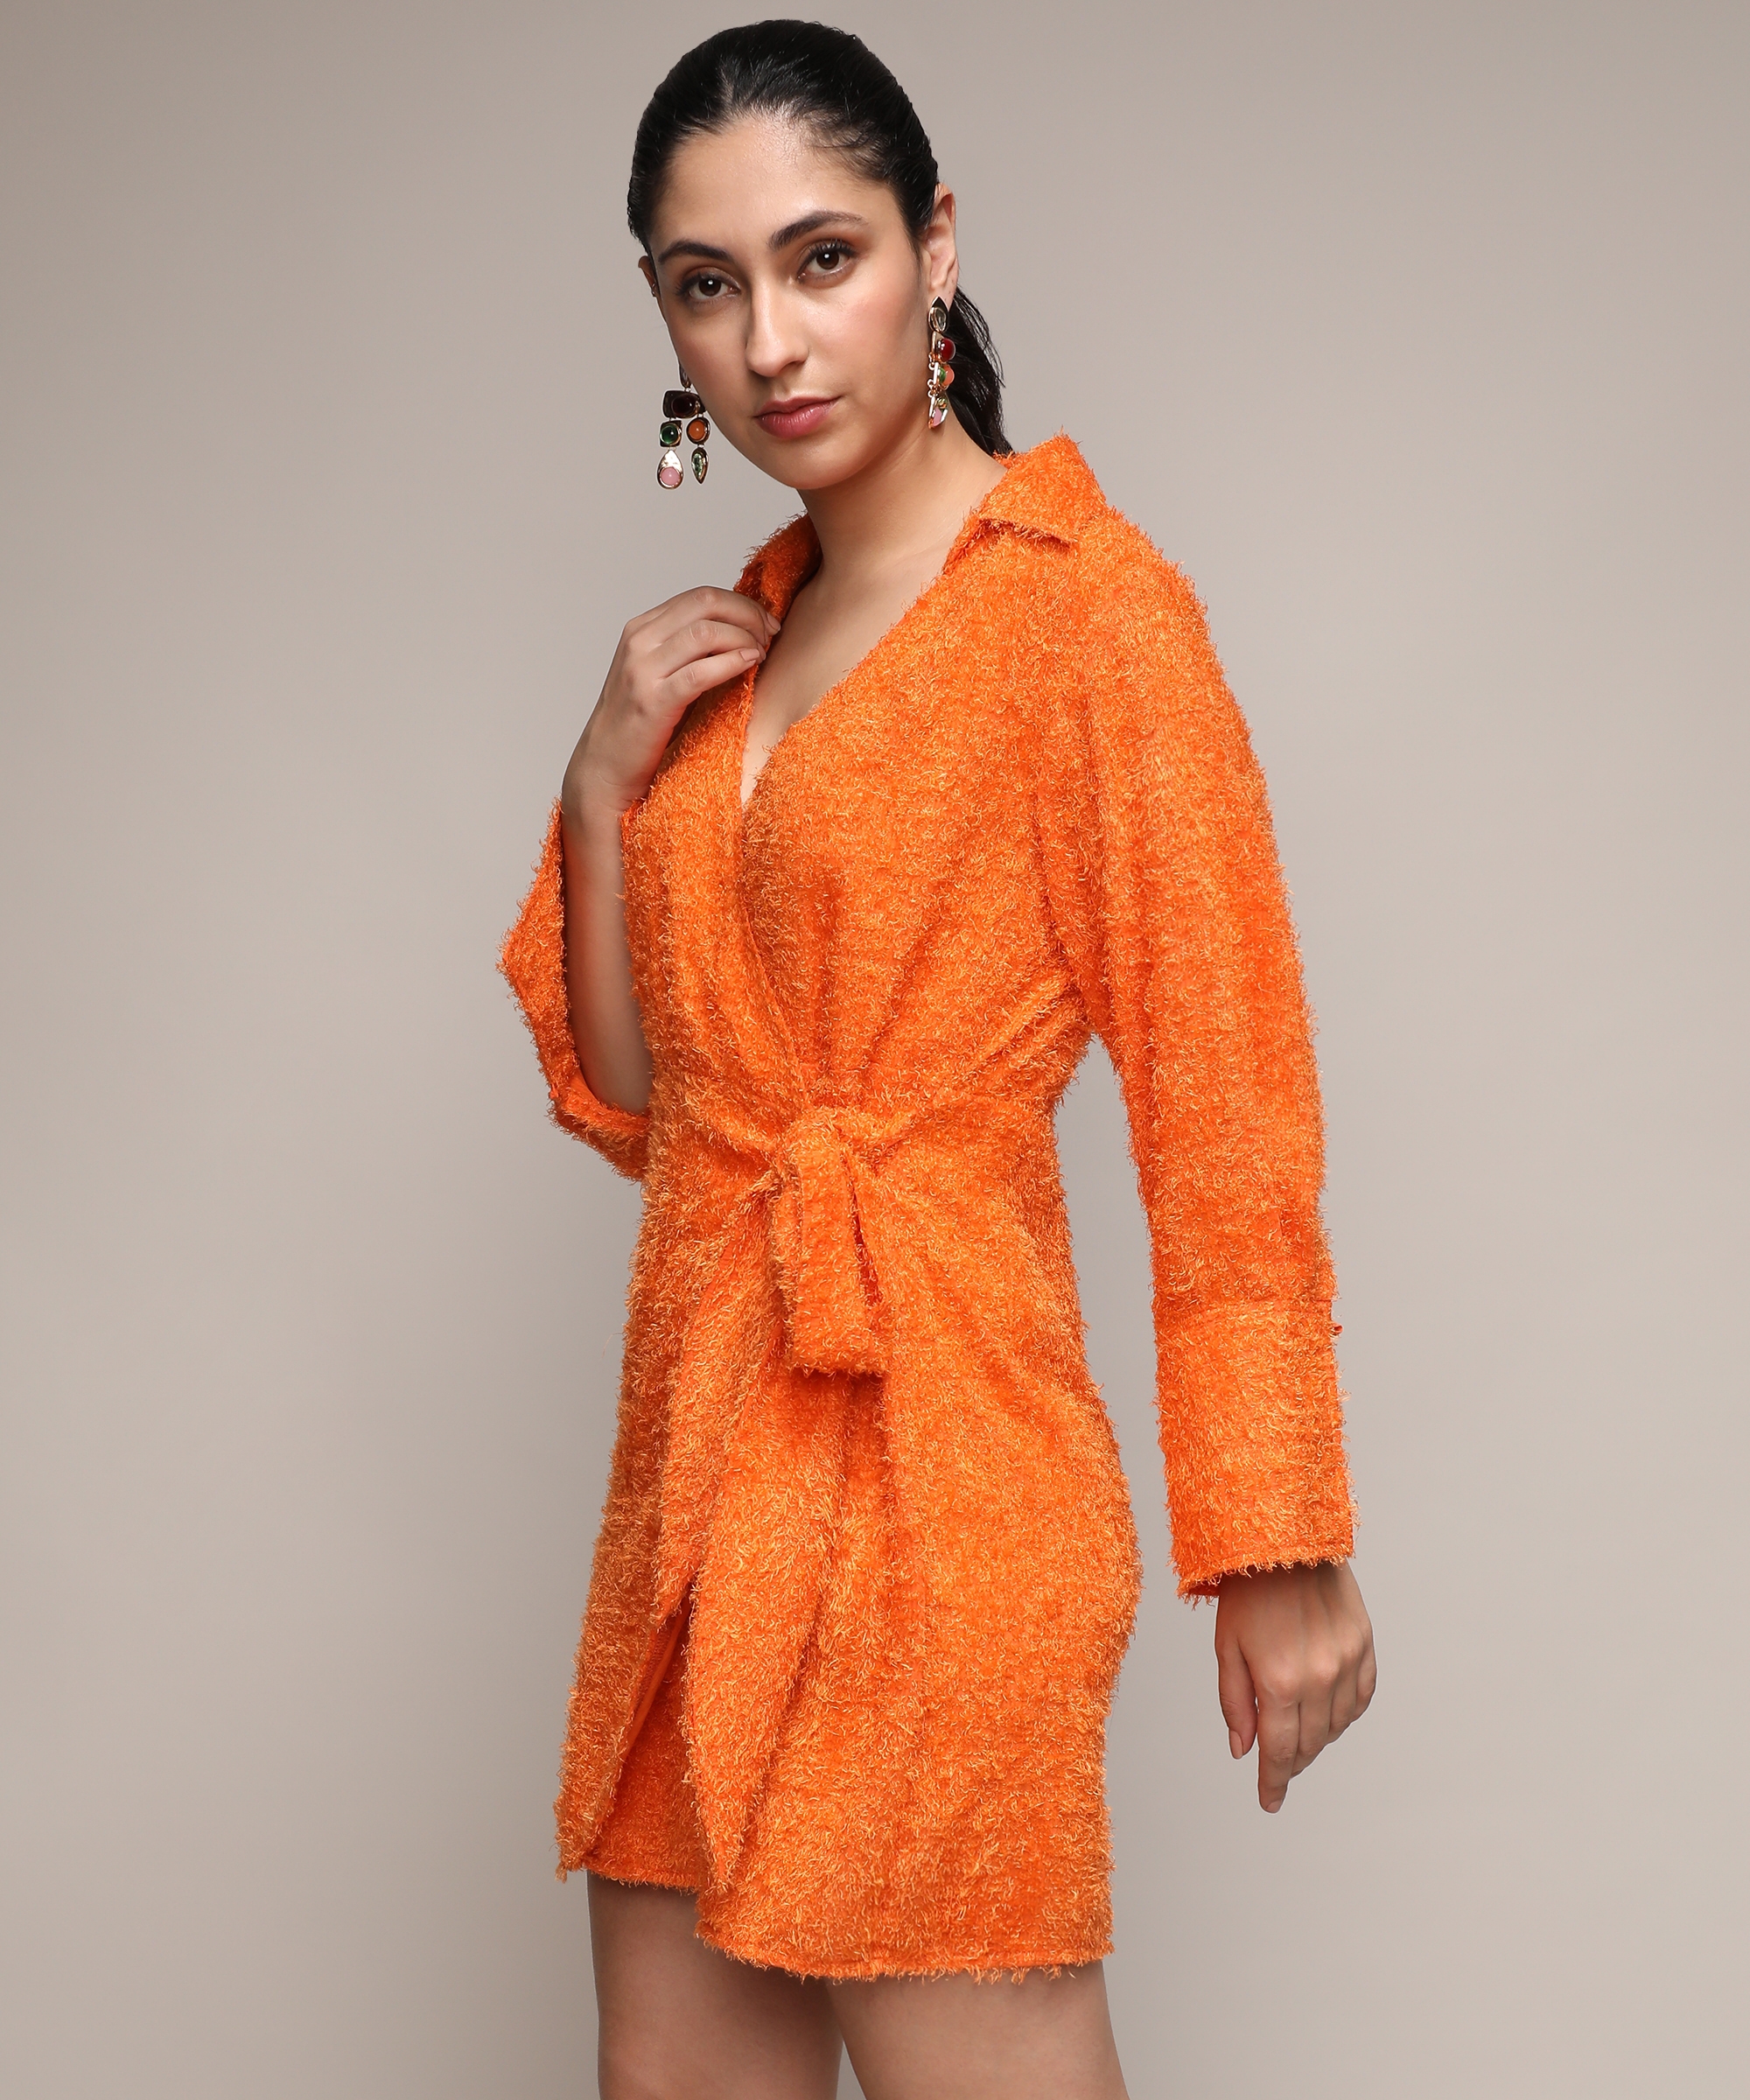 CAMPUS SUTRA | Women's Pumpkin Orange Solid Mini Dress